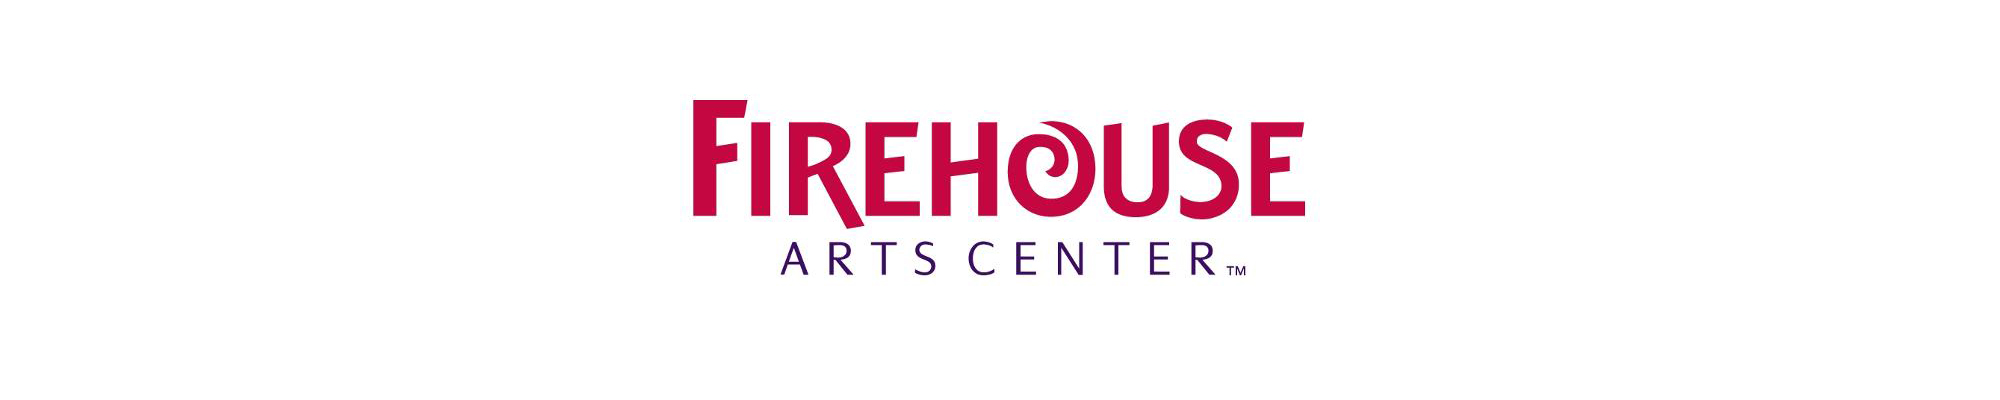 City of Pleasanton - Firehouse Arts Center